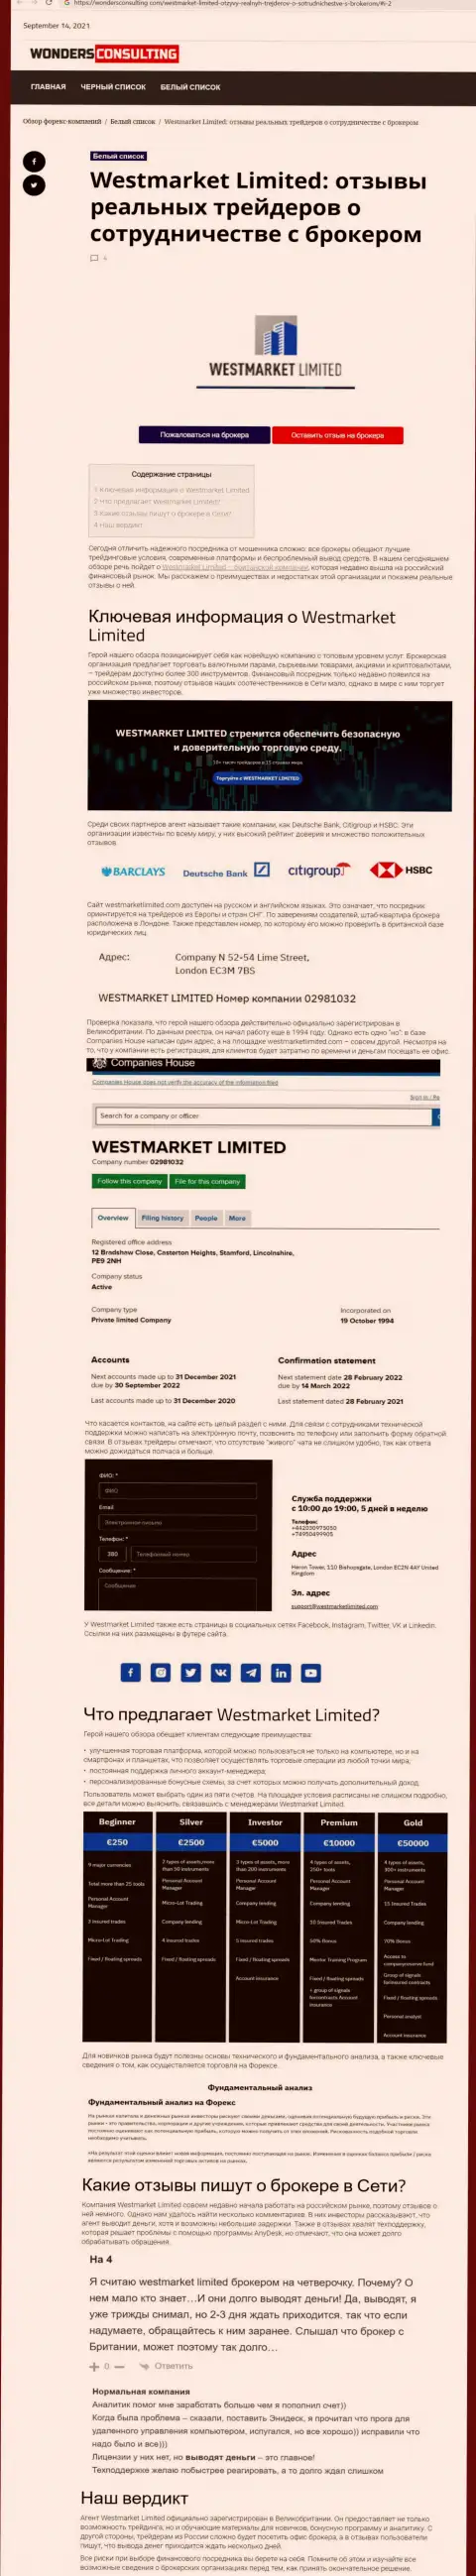 Материал о Форекс брокерской компании WestMarket Limited на сайте вондерконсалтинг ком